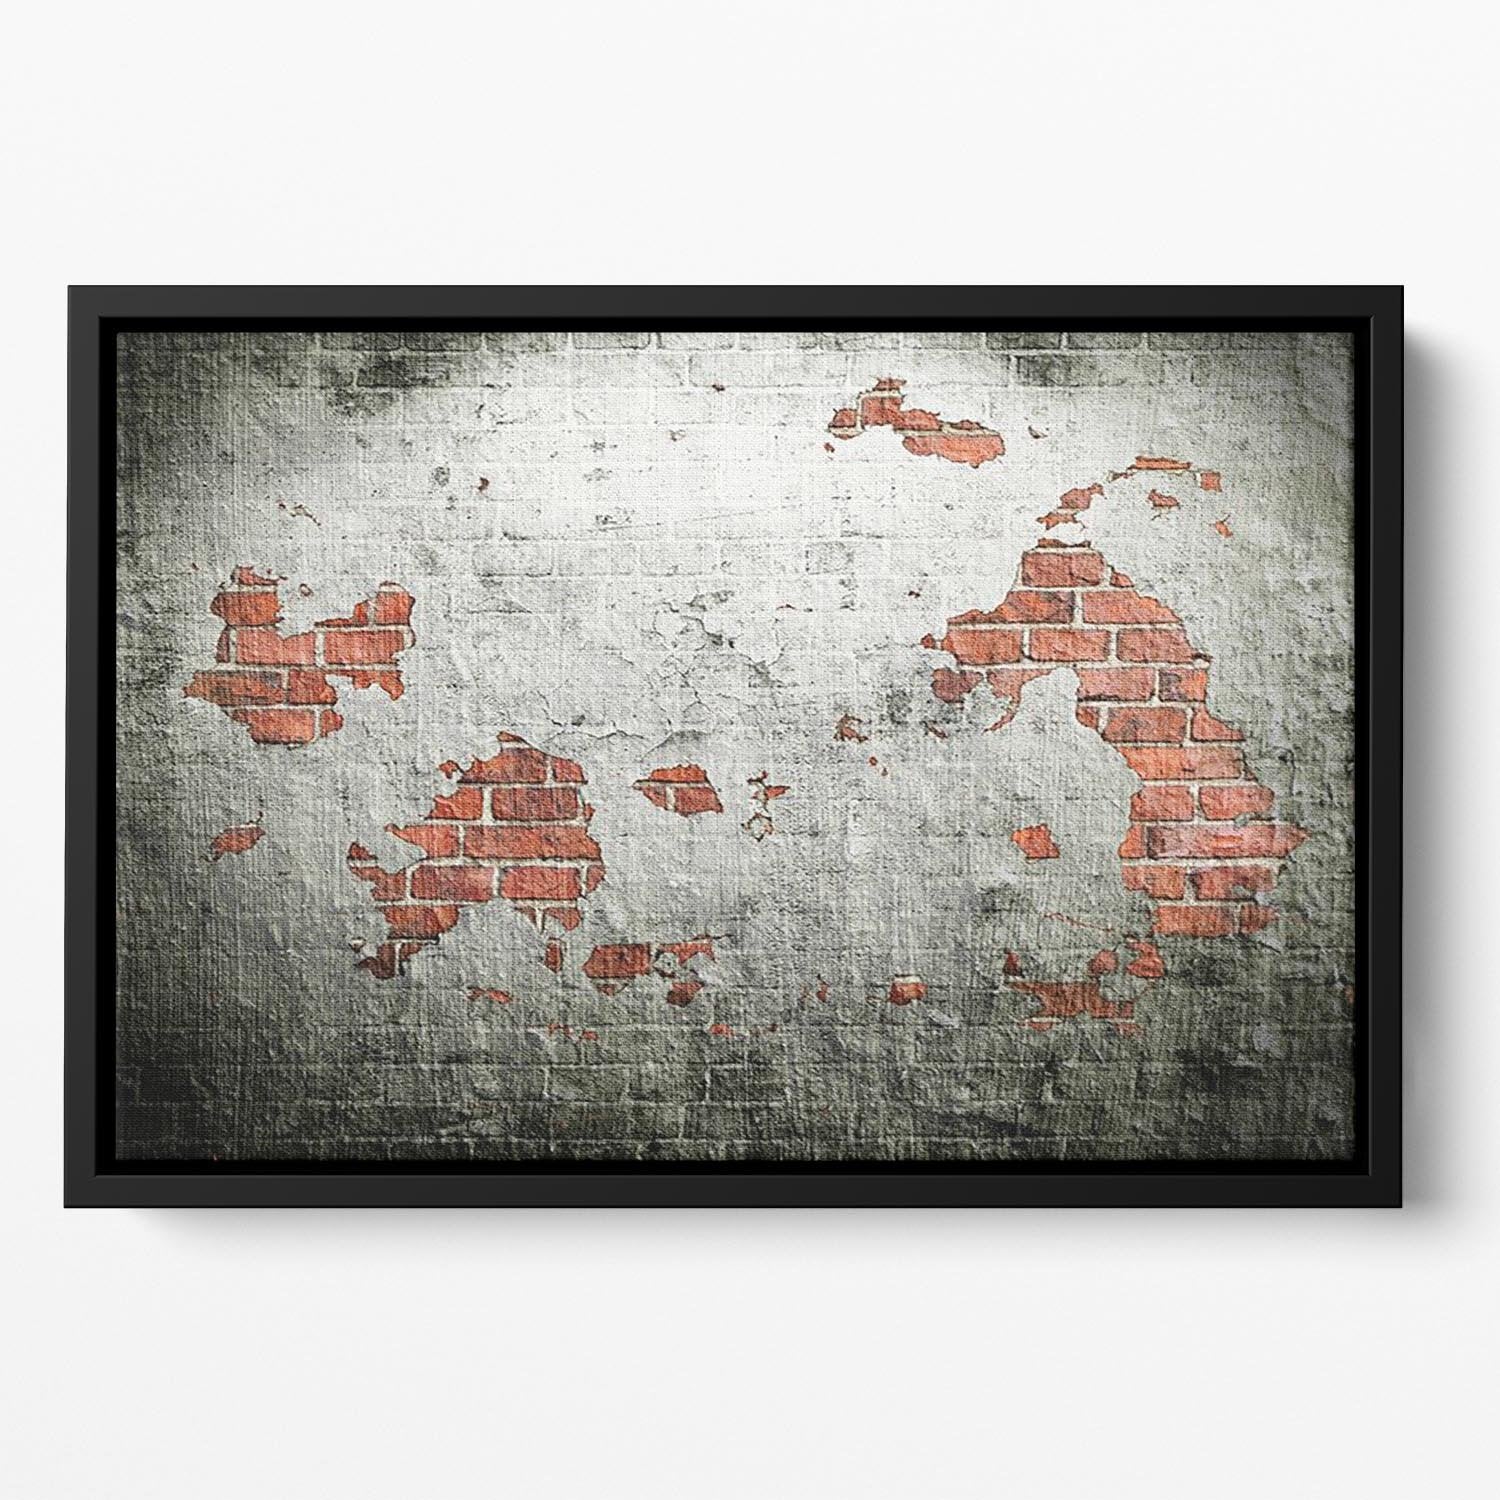 Grunge wall background Floating Framed Canvas - Canvas Art Rocks - 2